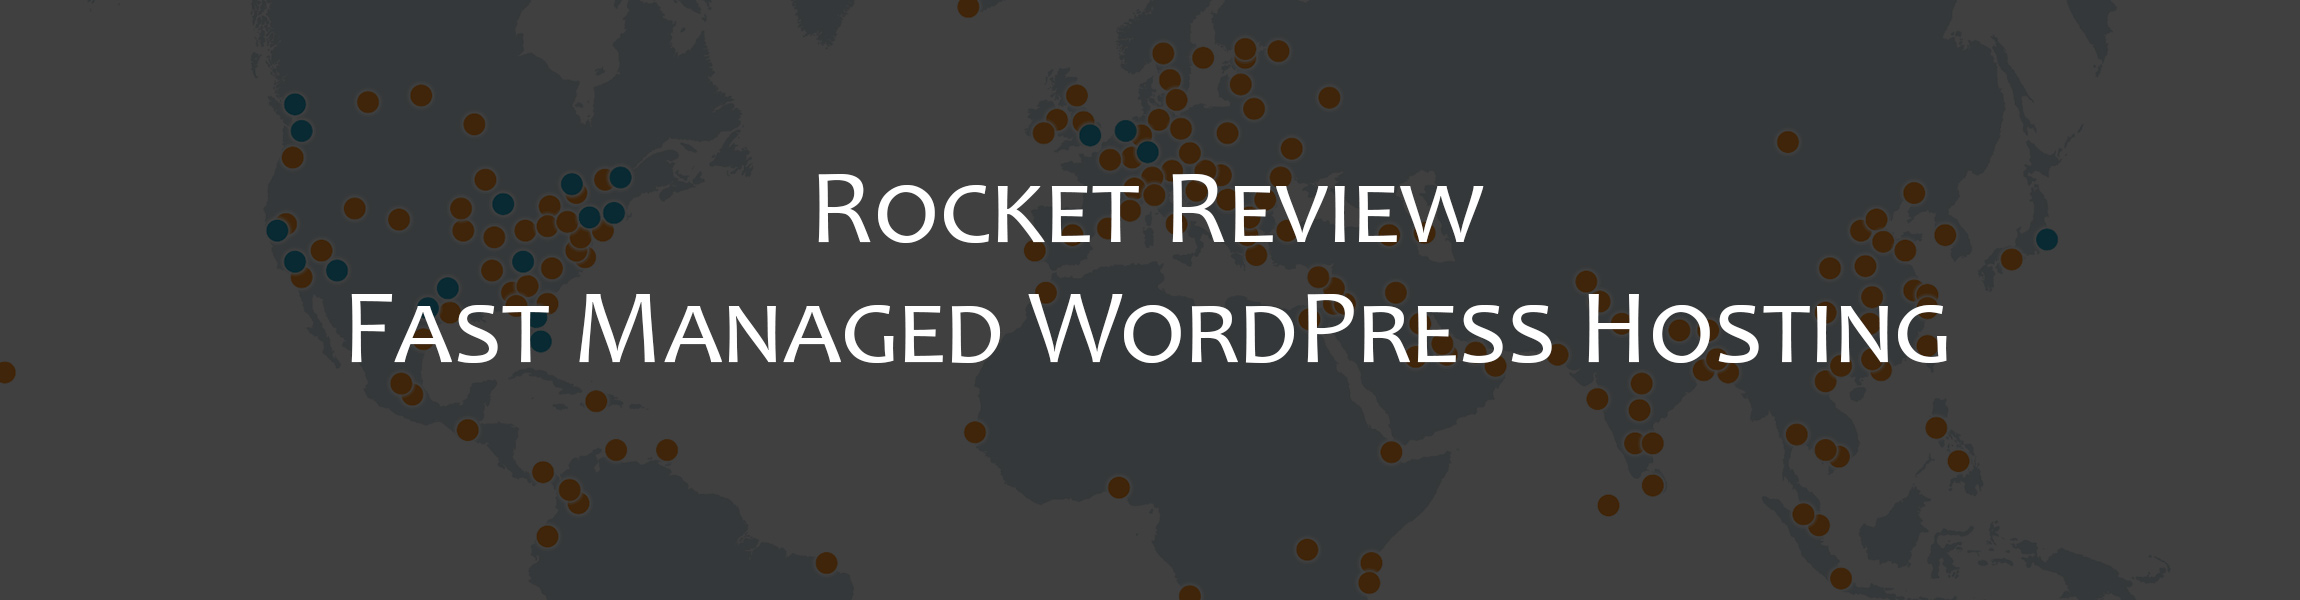 rocket review